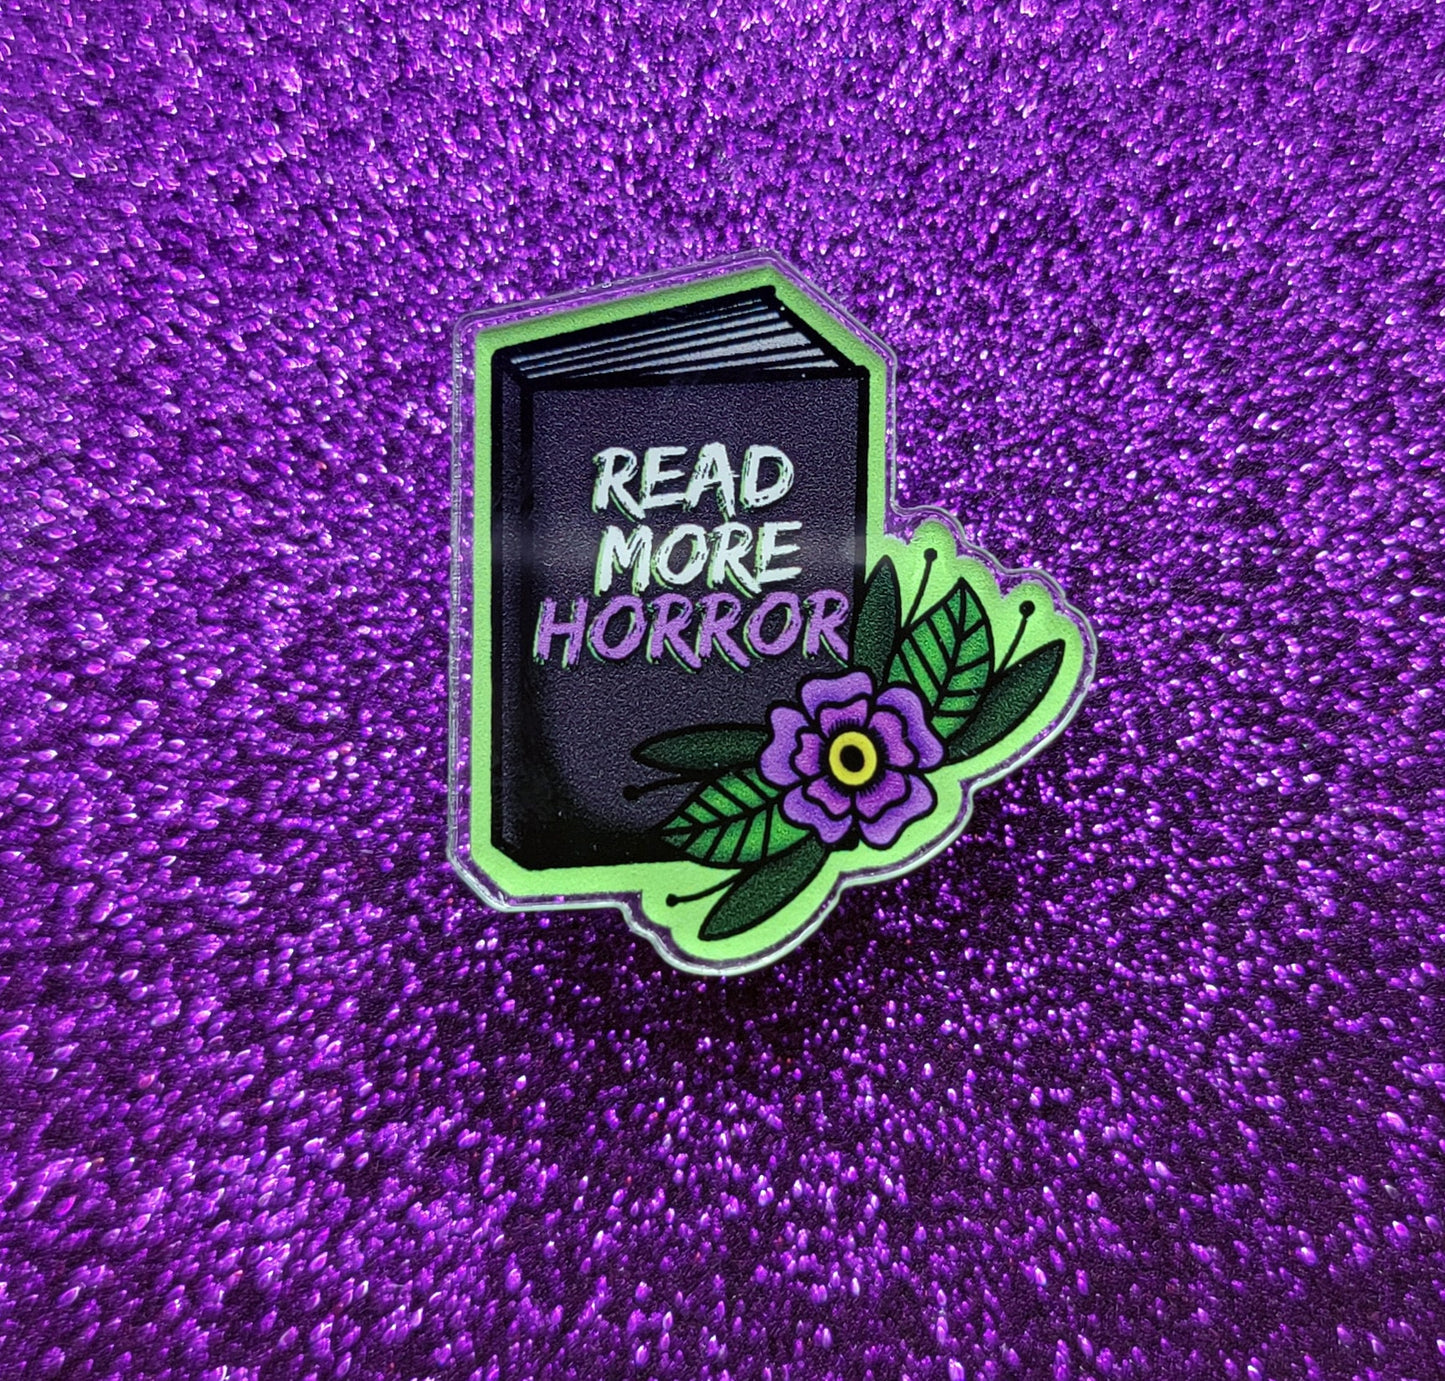 Read More Horror Books Acrylic Pin